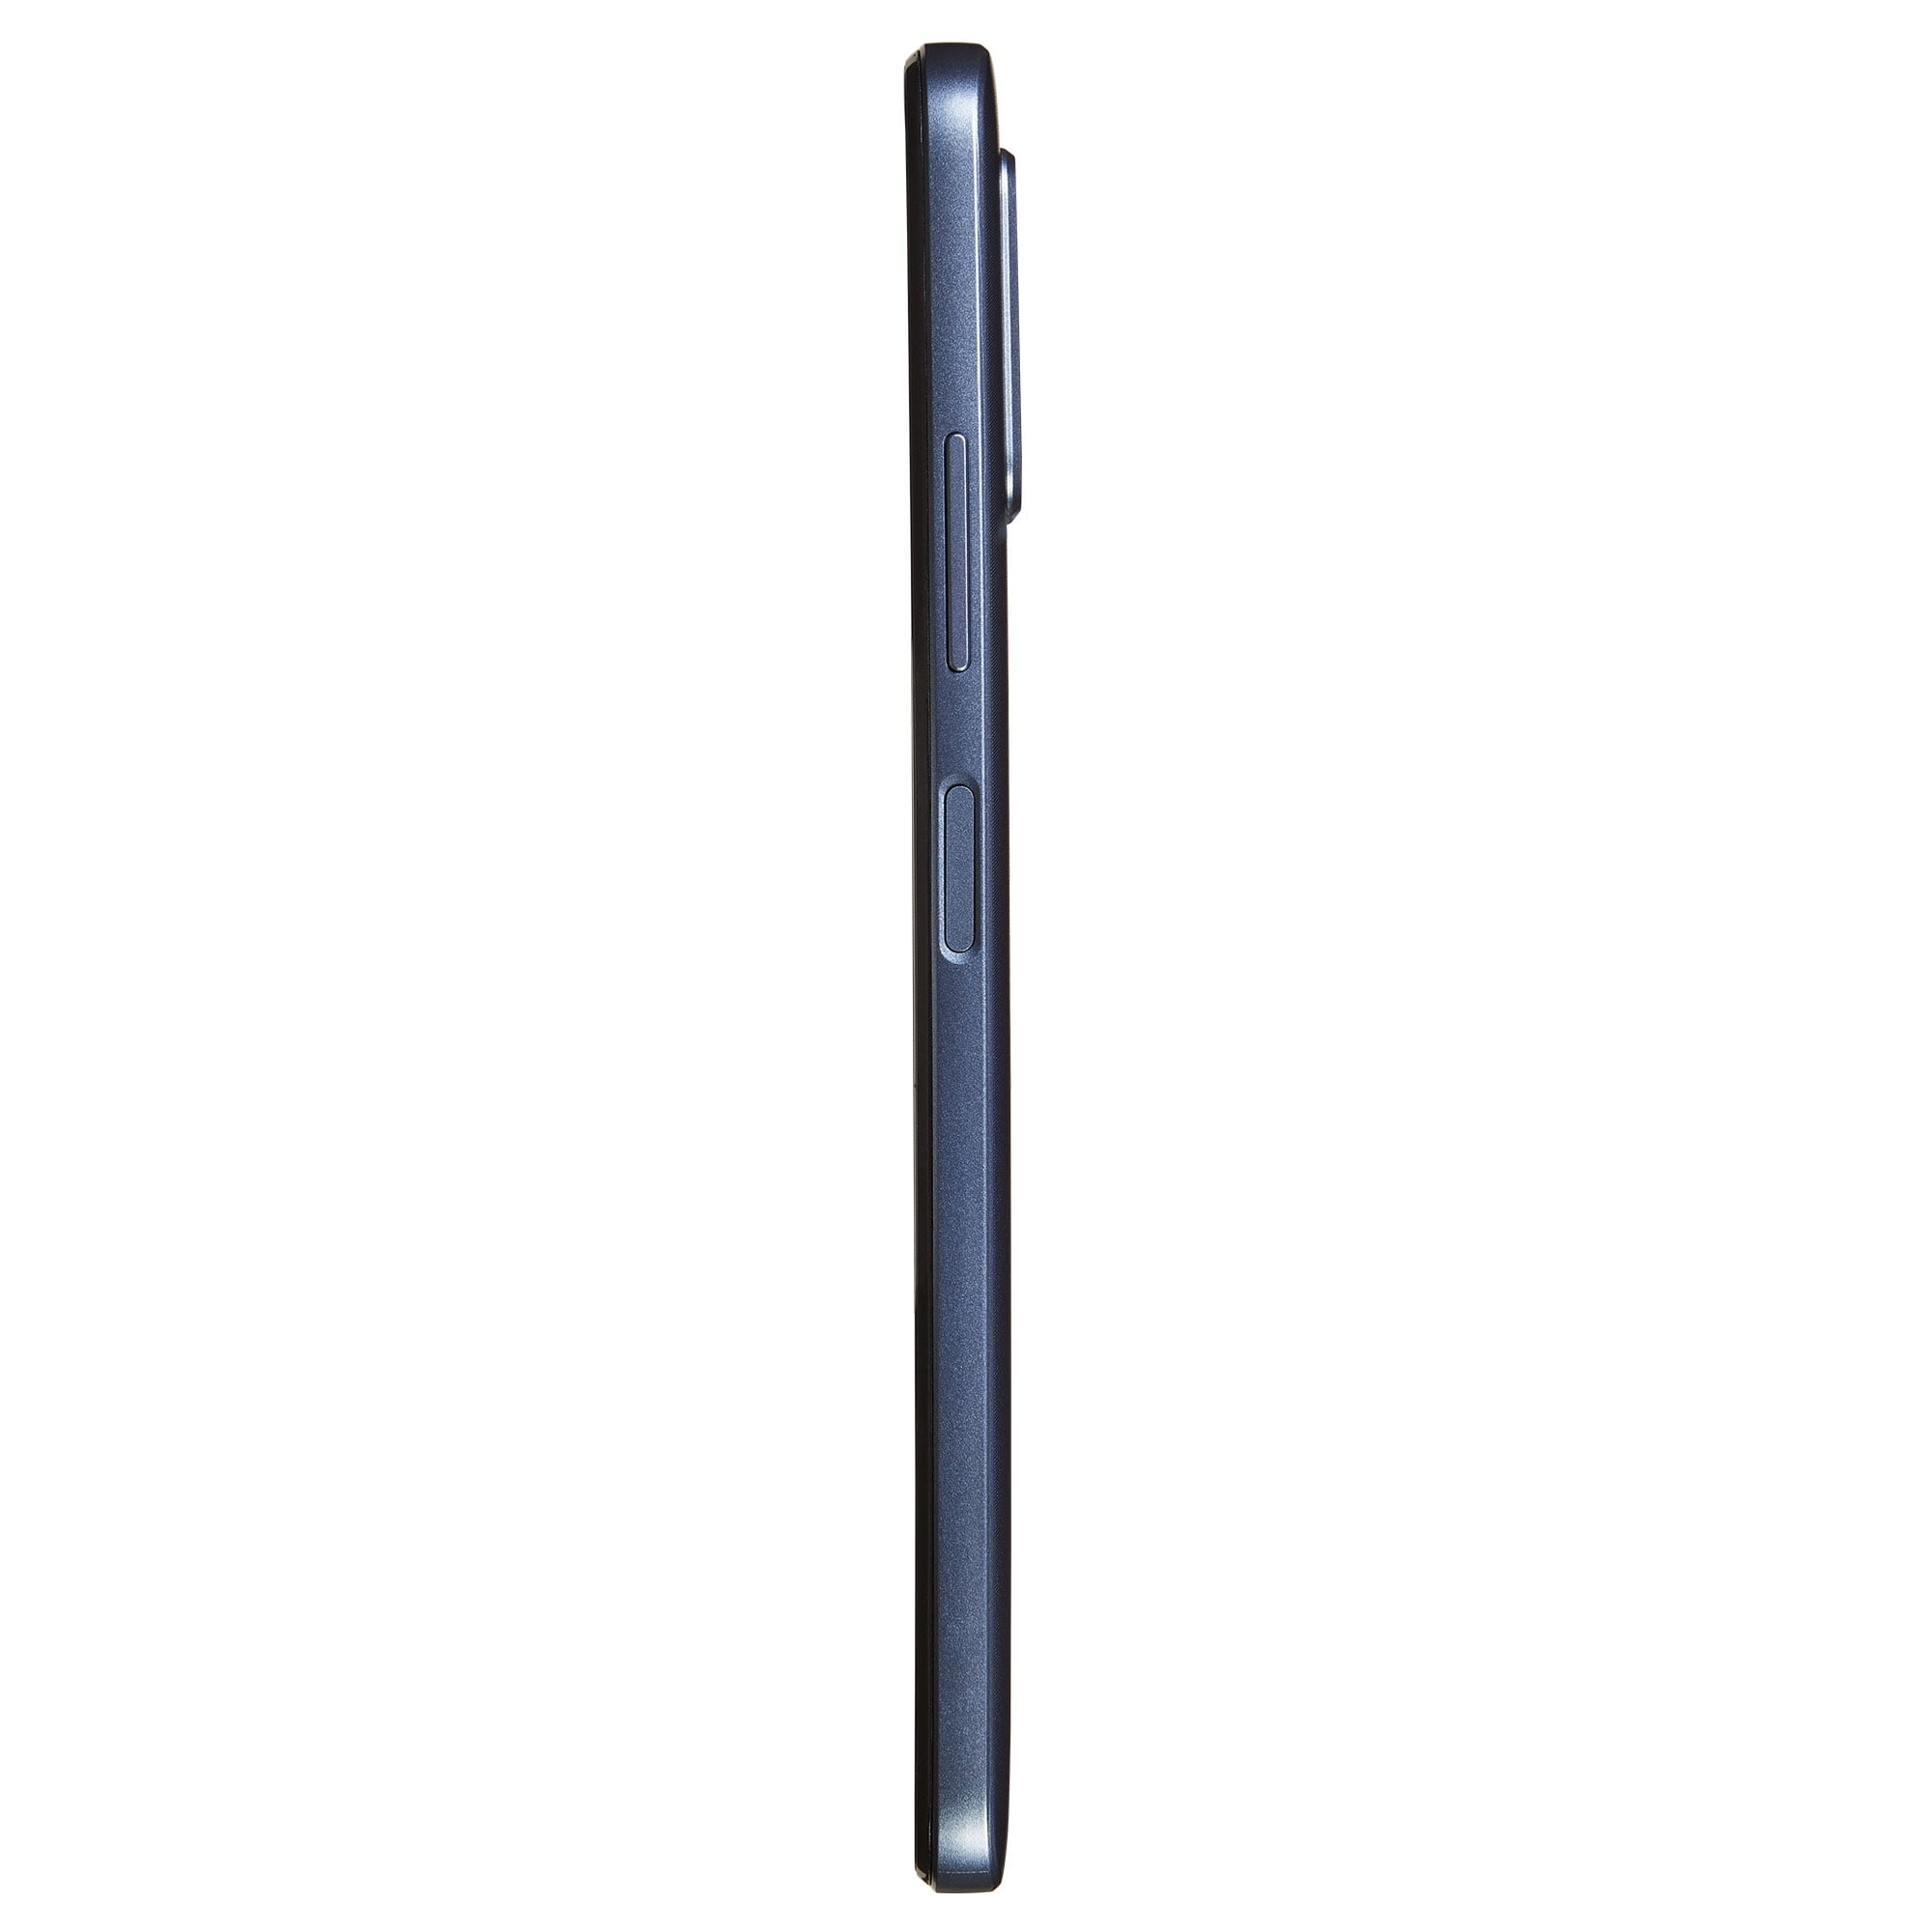 Nokia C300 32GB (Unlocked) Blue TA-1515 - Best Buy